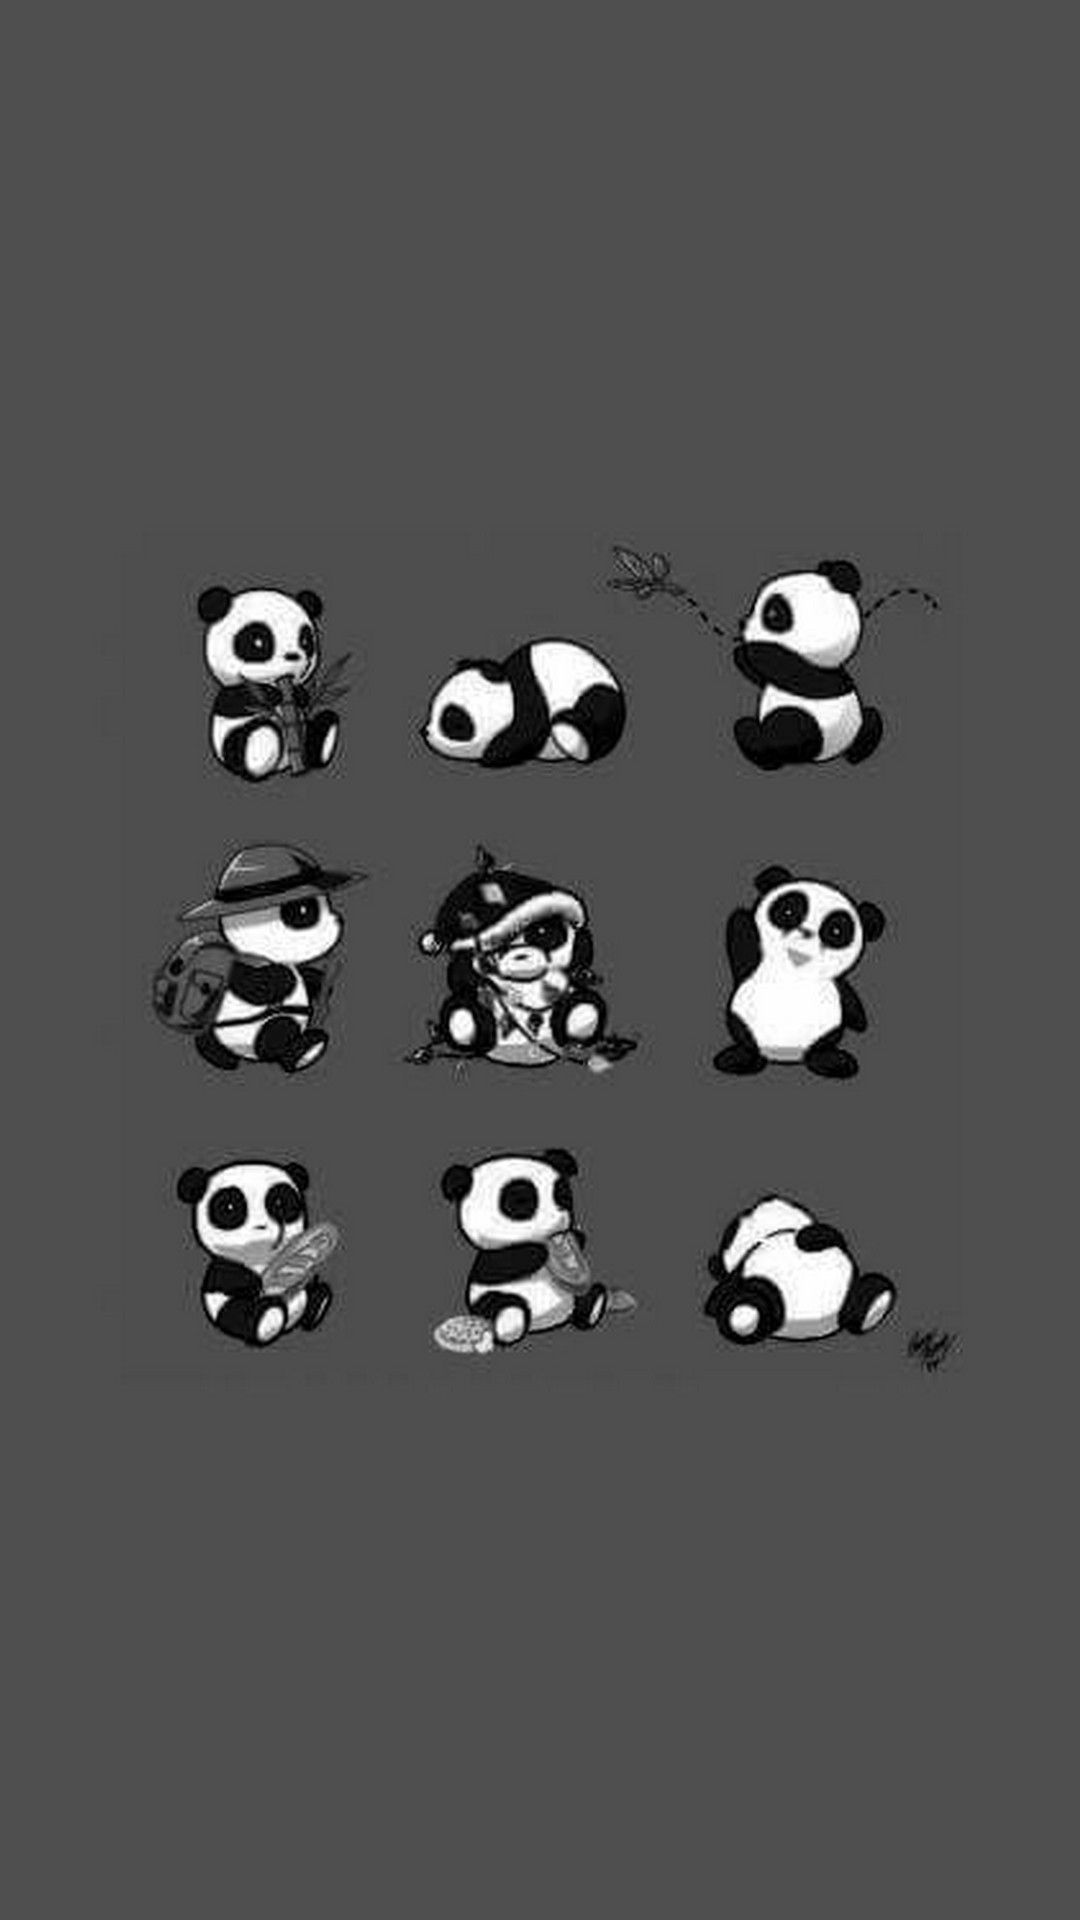 Baby Panda HD Wallpaper For Mobile Best